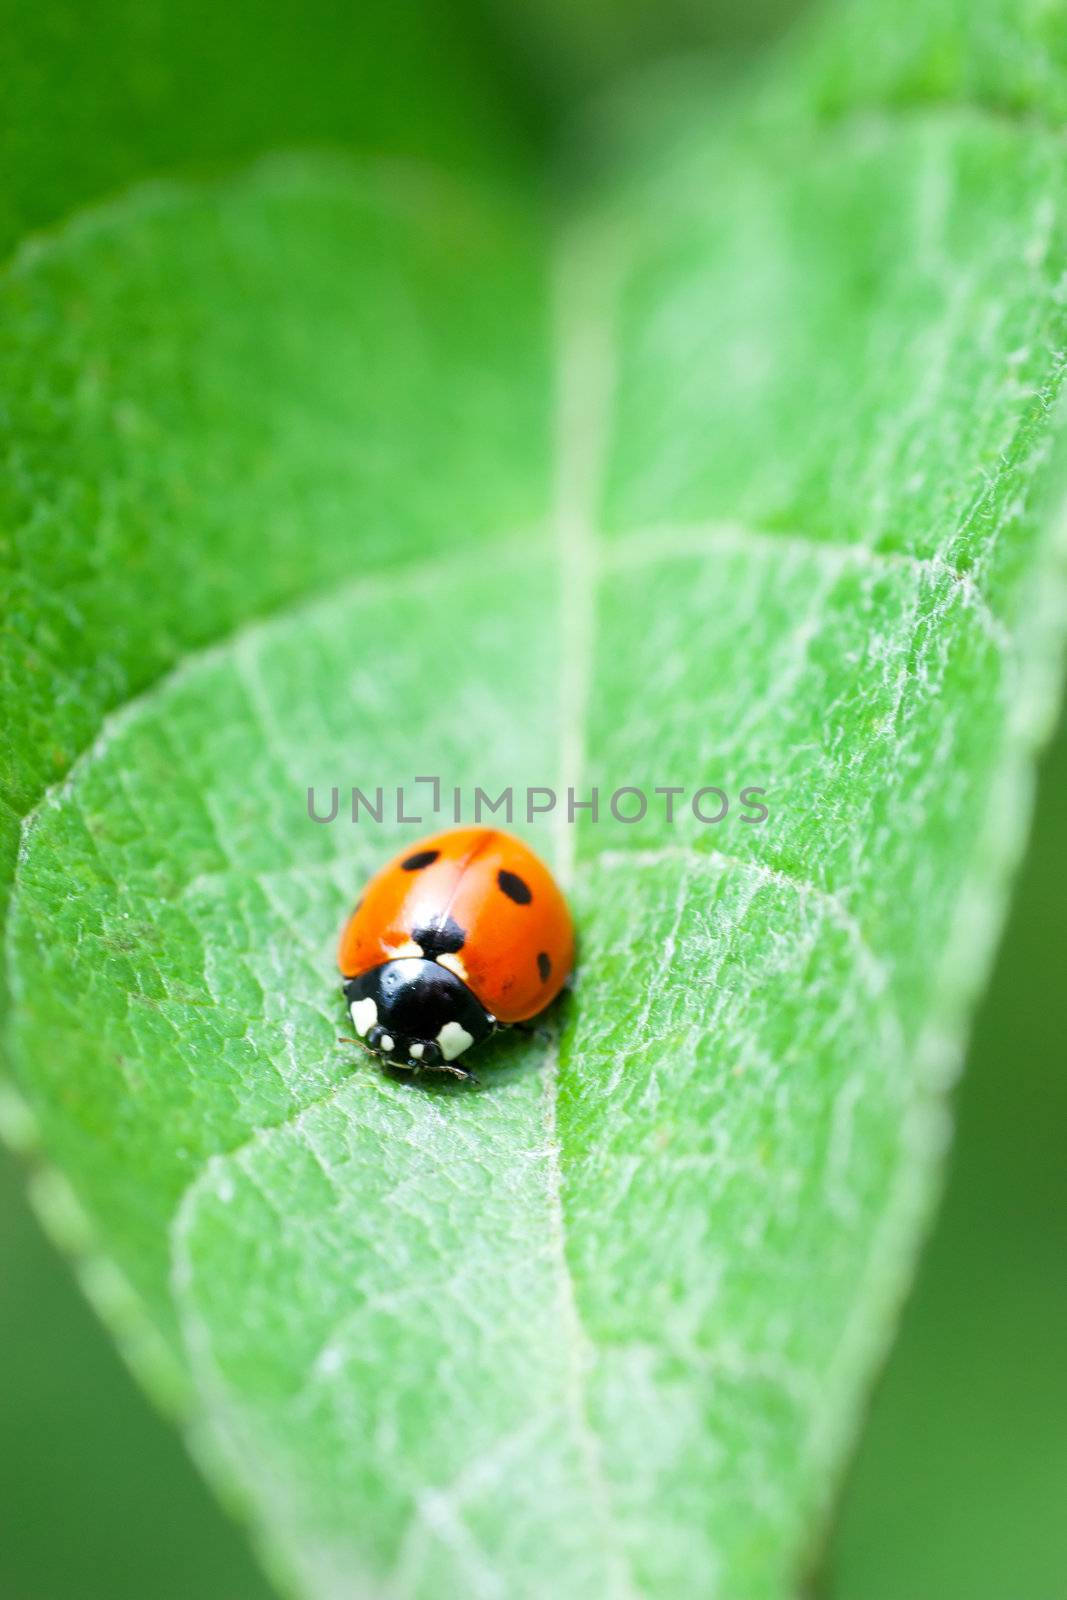 Macro view of ladybug sitting on a green leaf